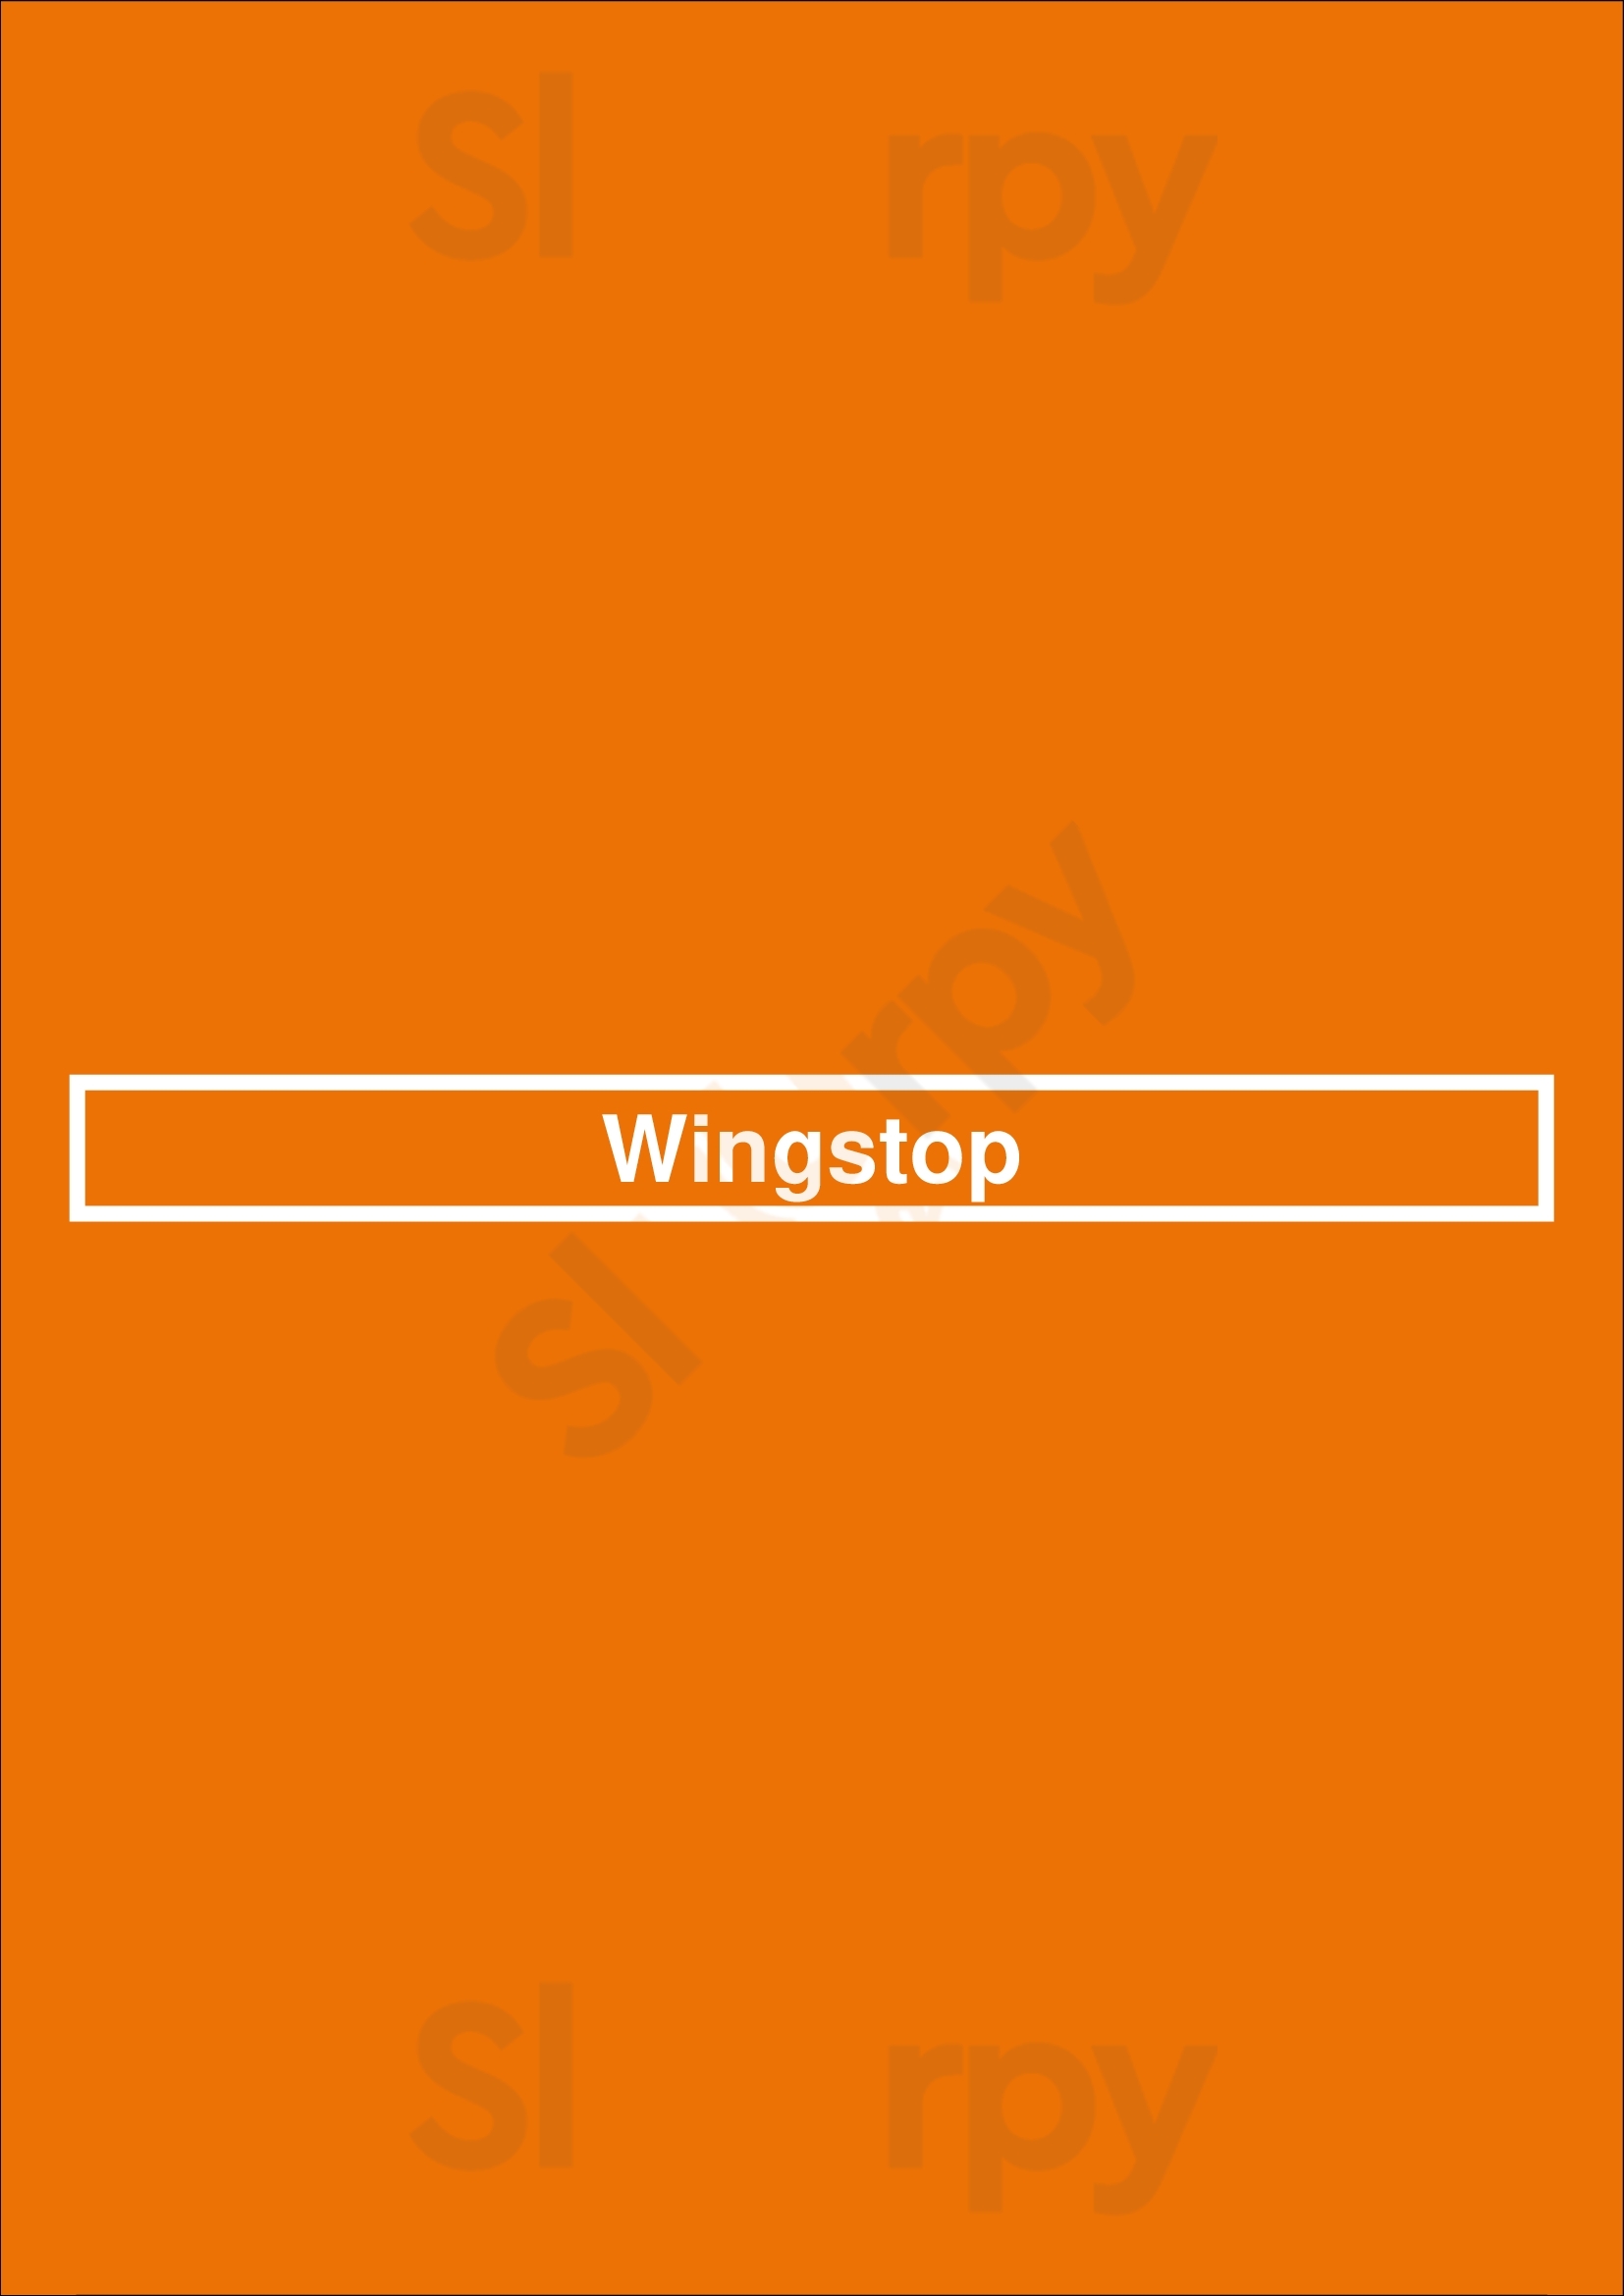 Wingstop Plano Menu - 1